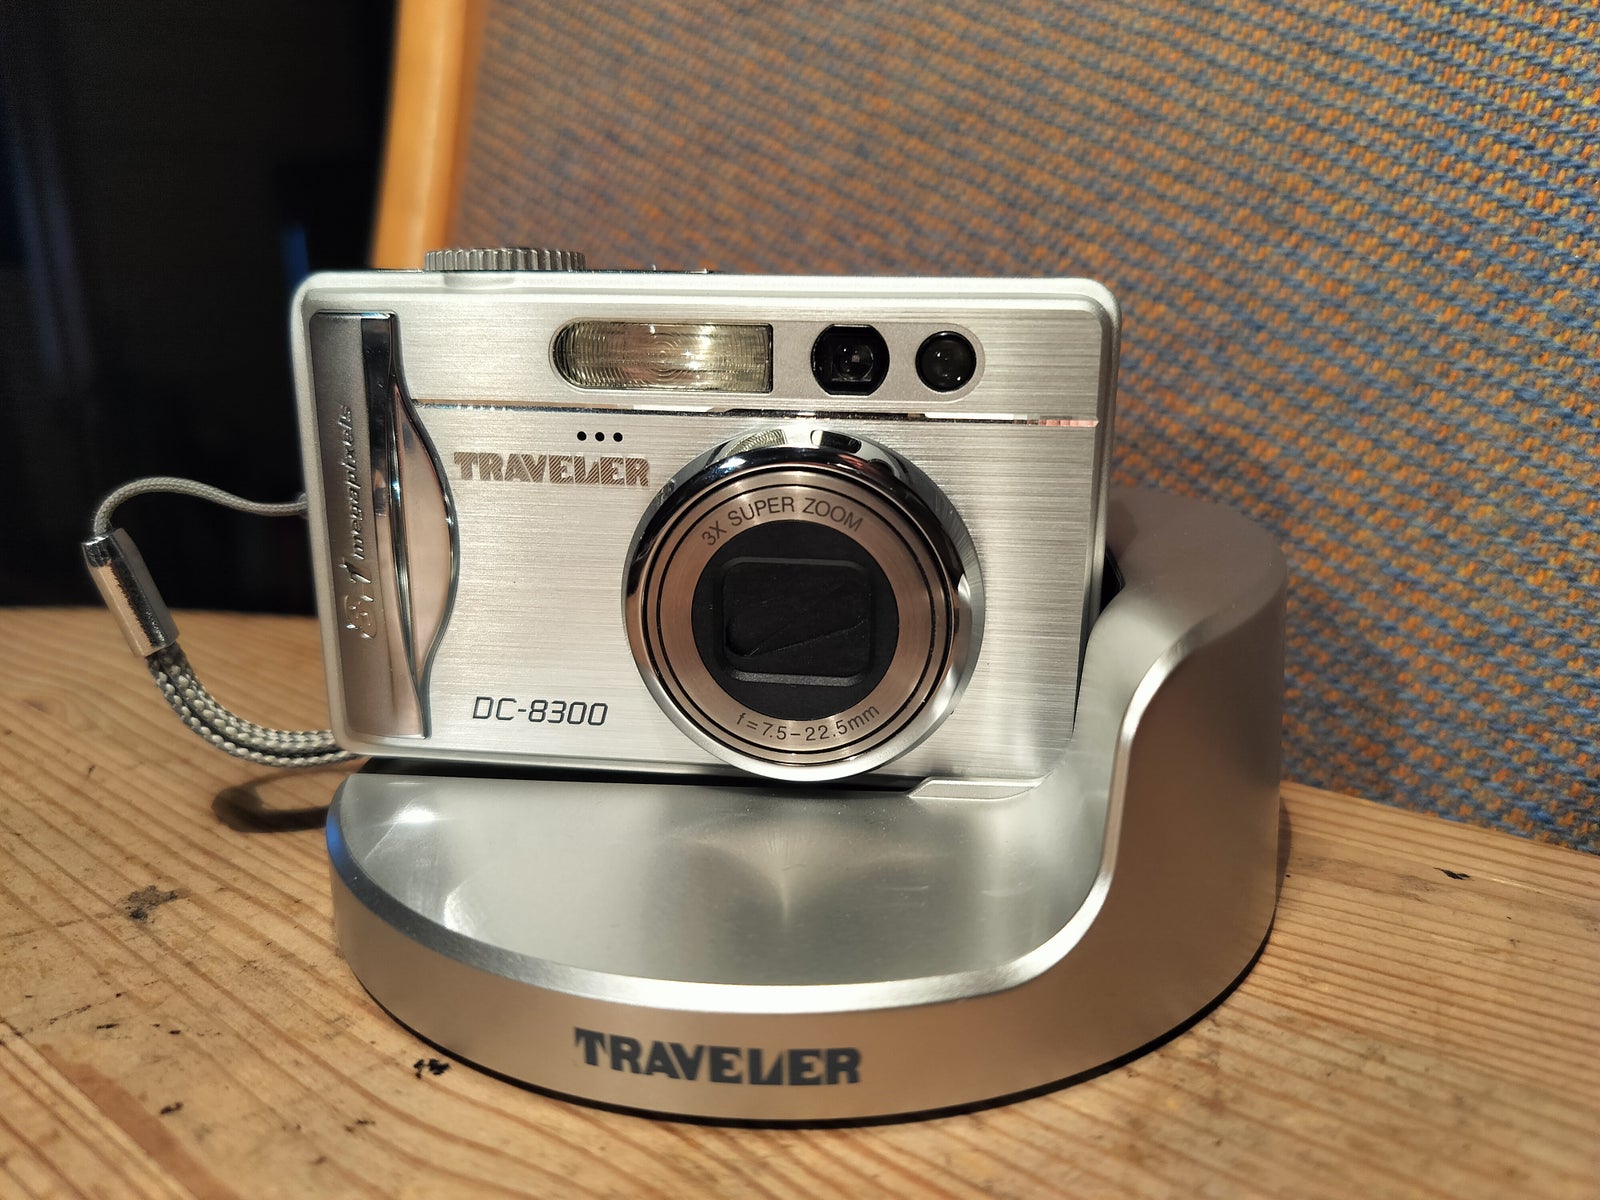 Traveler, DC-8300, 8.1 megapixels